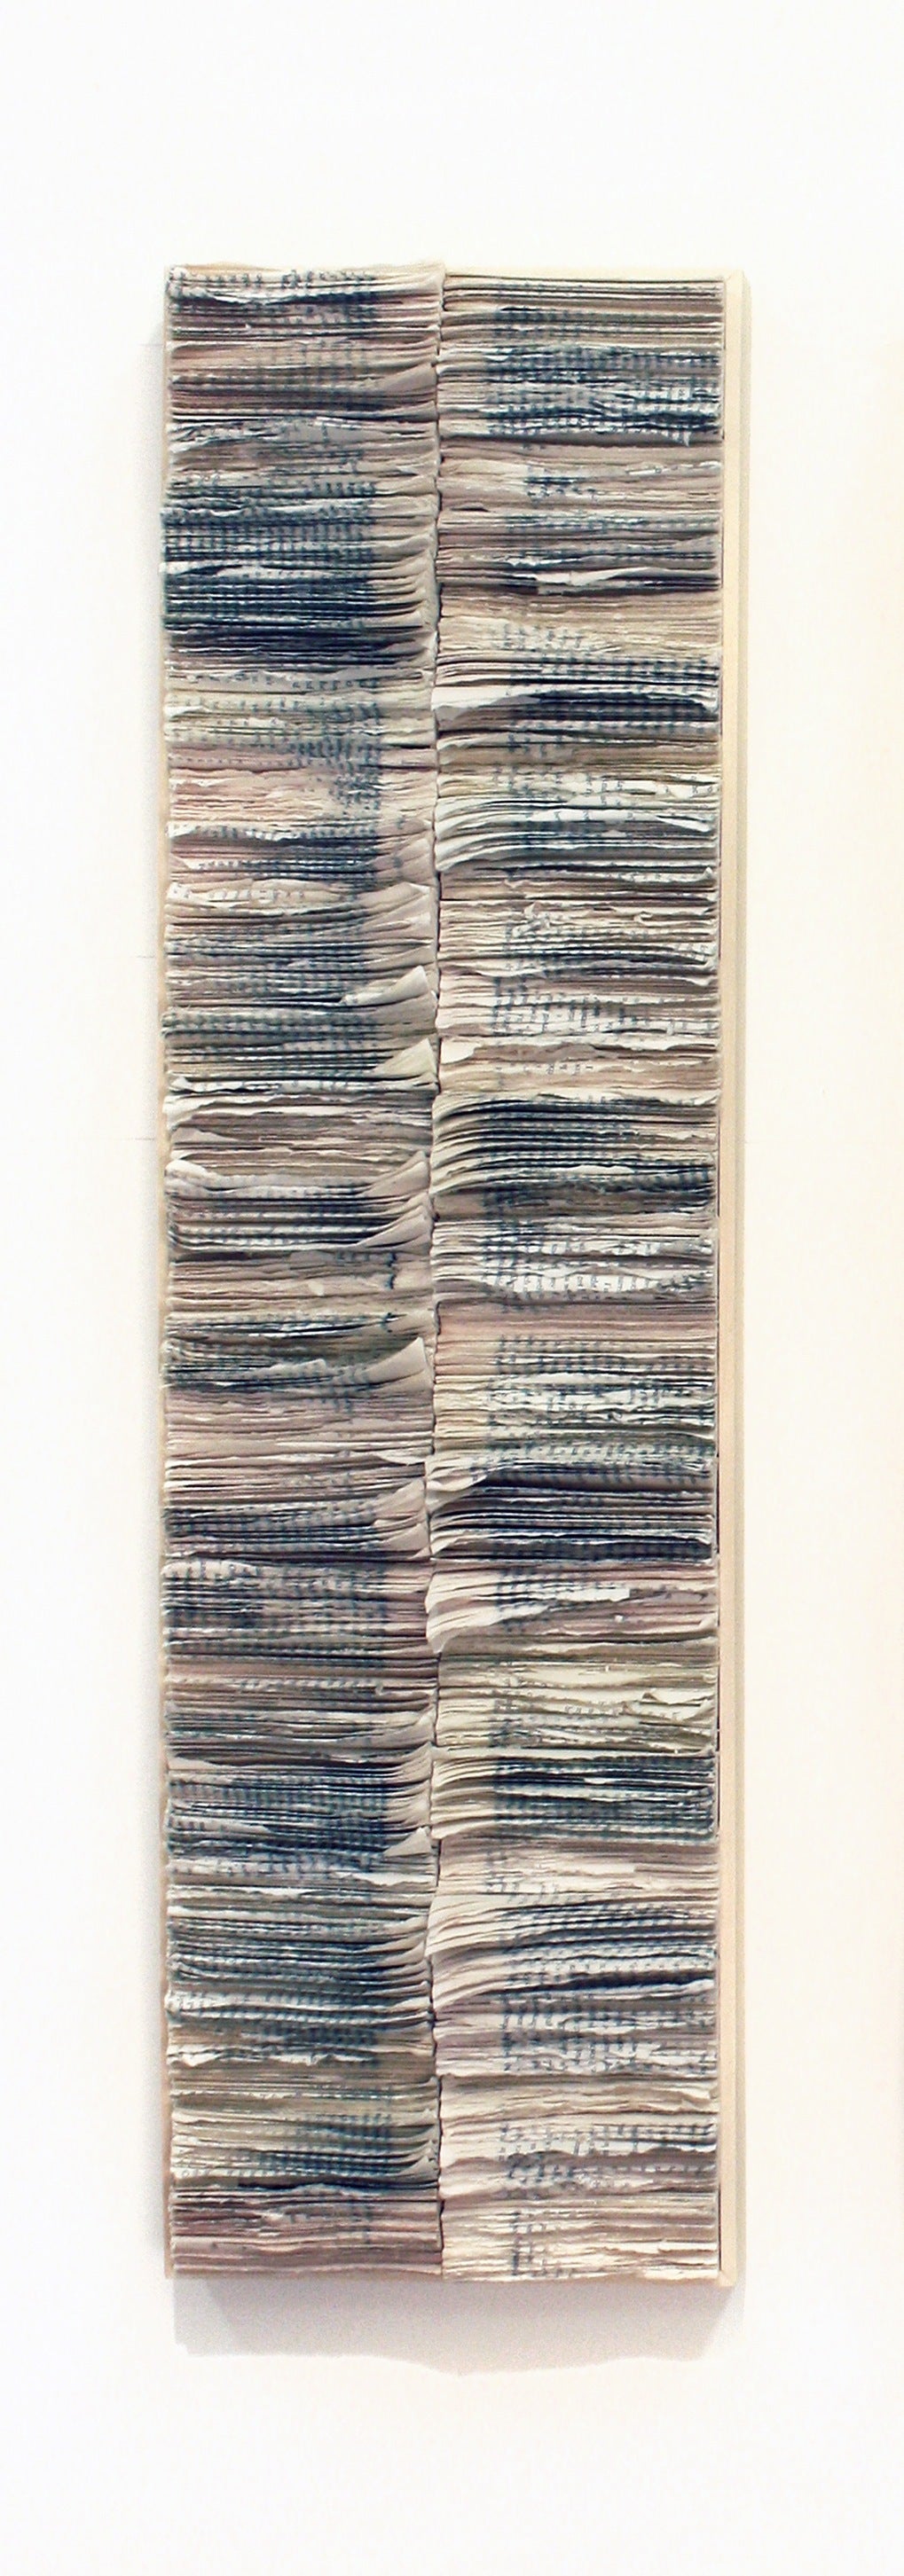 Jessica Drenk Abstract Sculpture - Spine 6